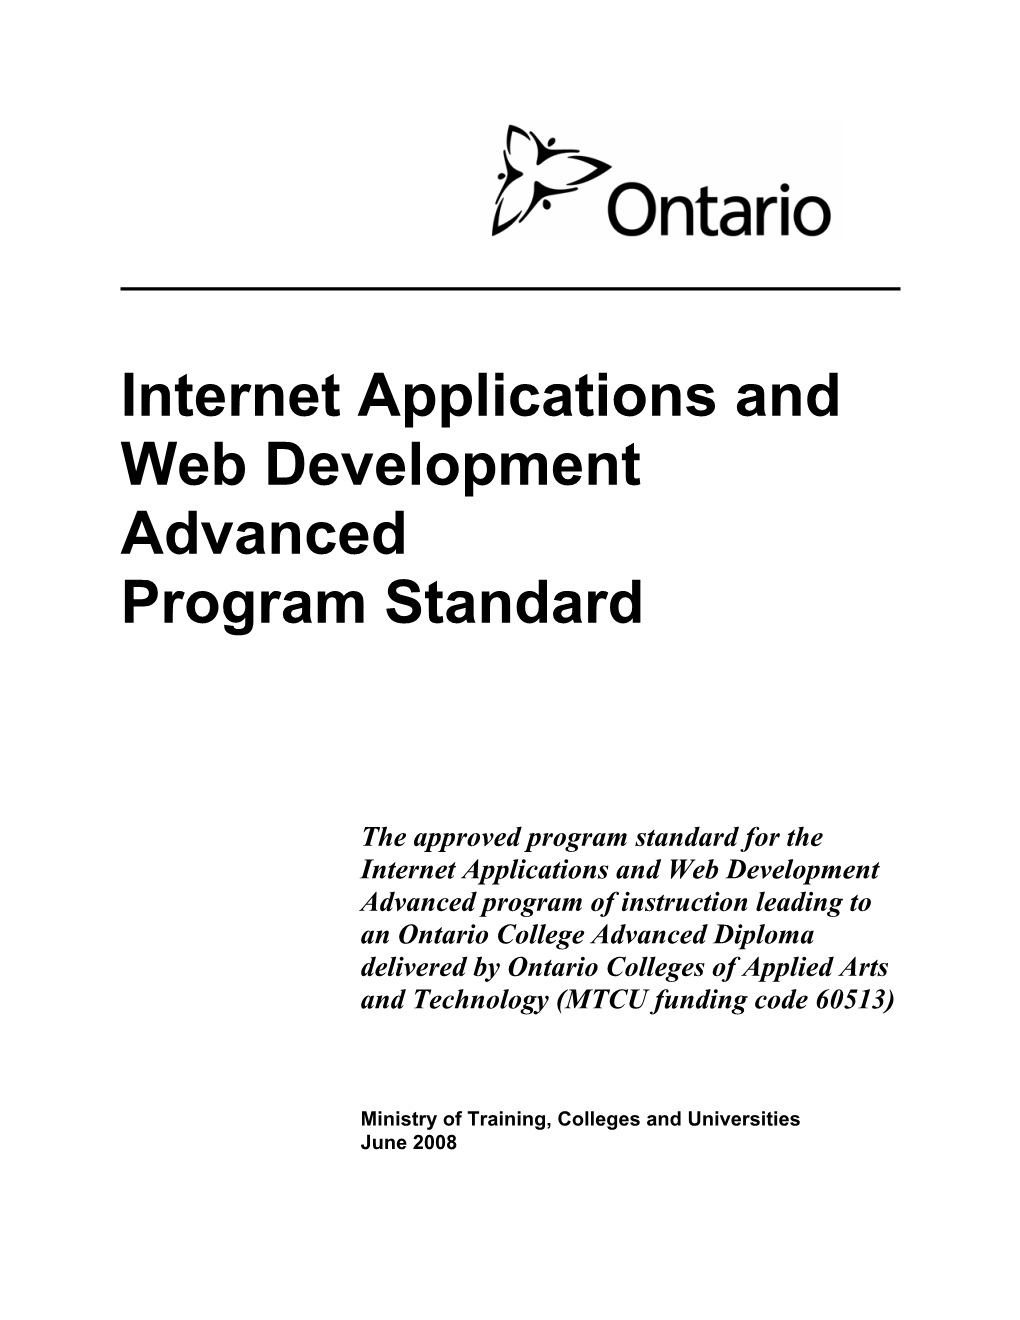 Internet Applications and Web Development Advanced Program